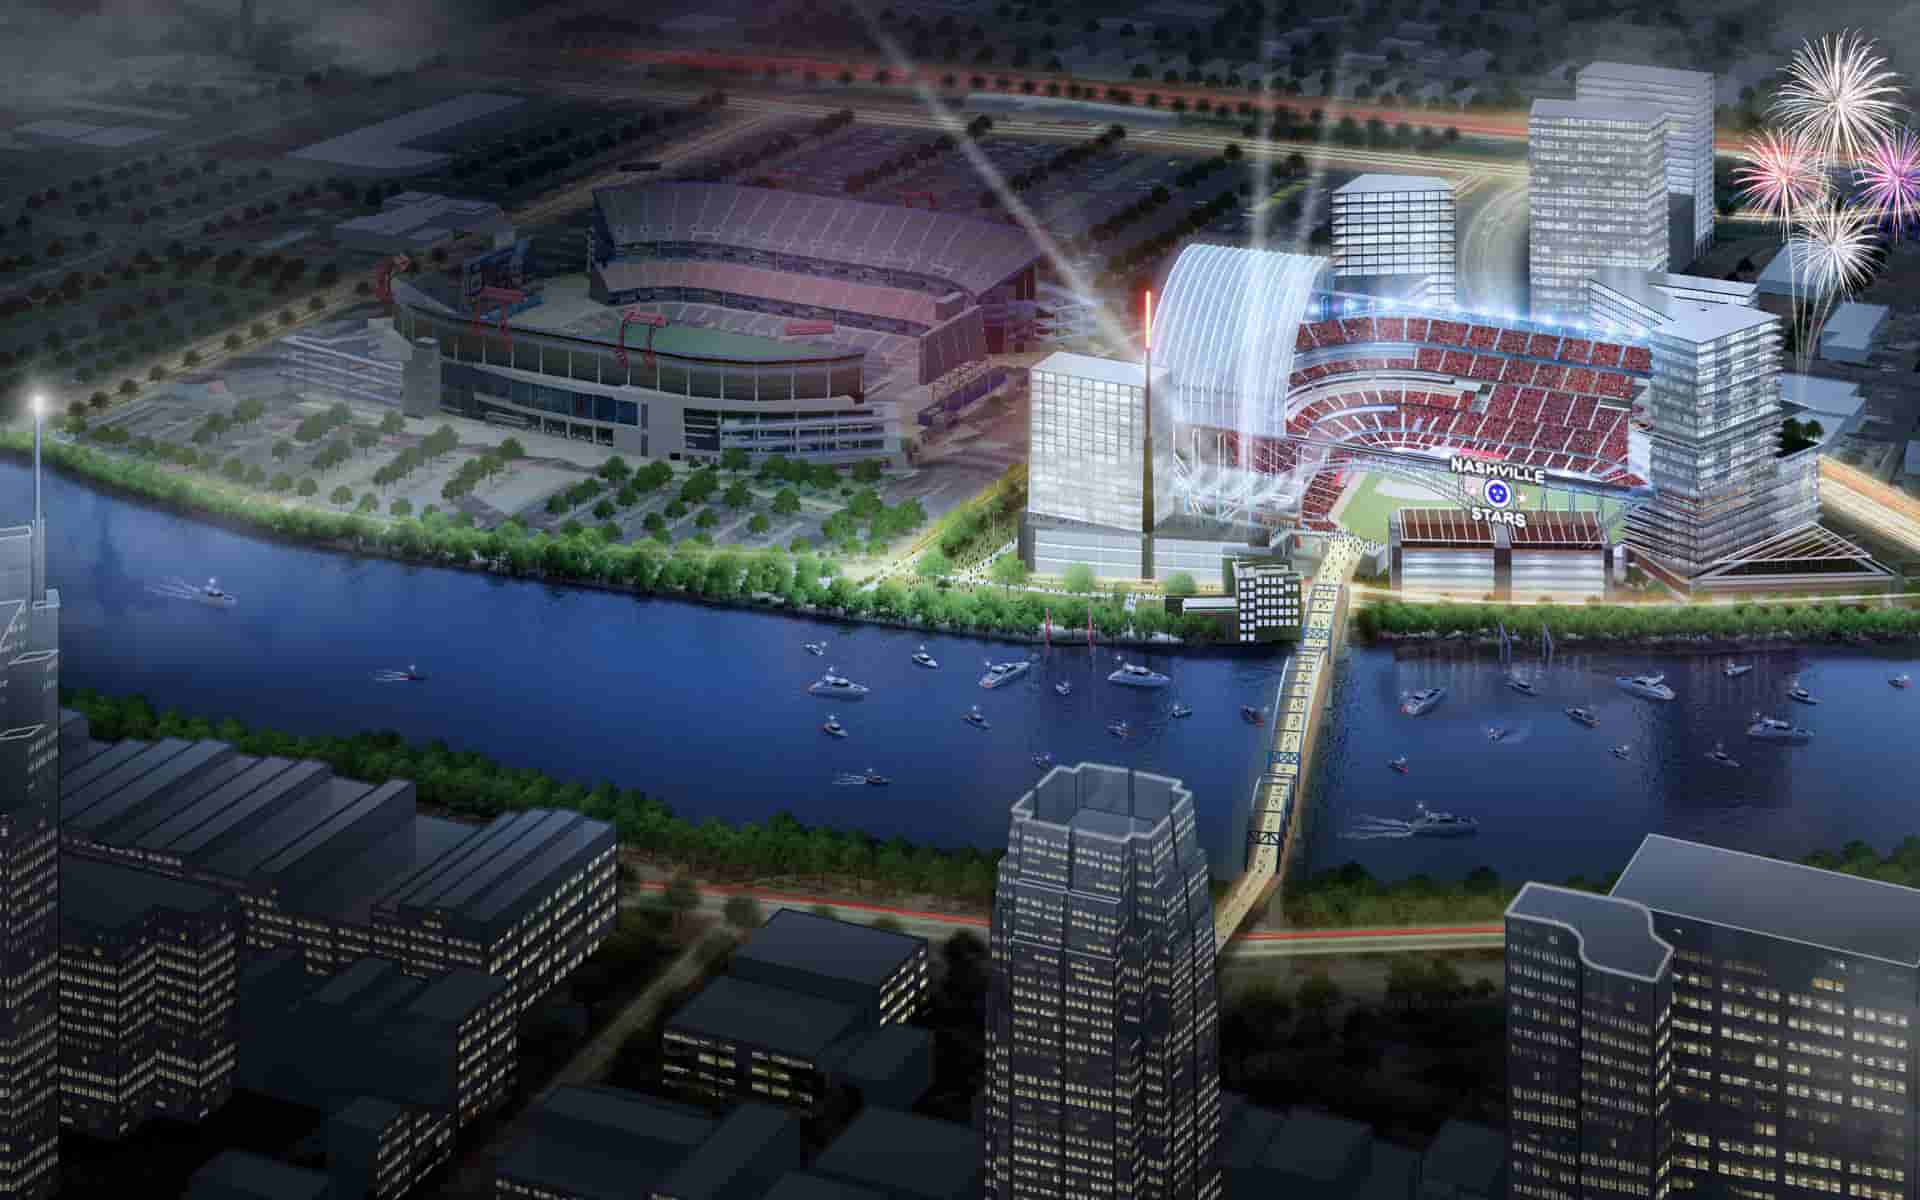 New renderings show baseball stadium in proposed 'GasWorx